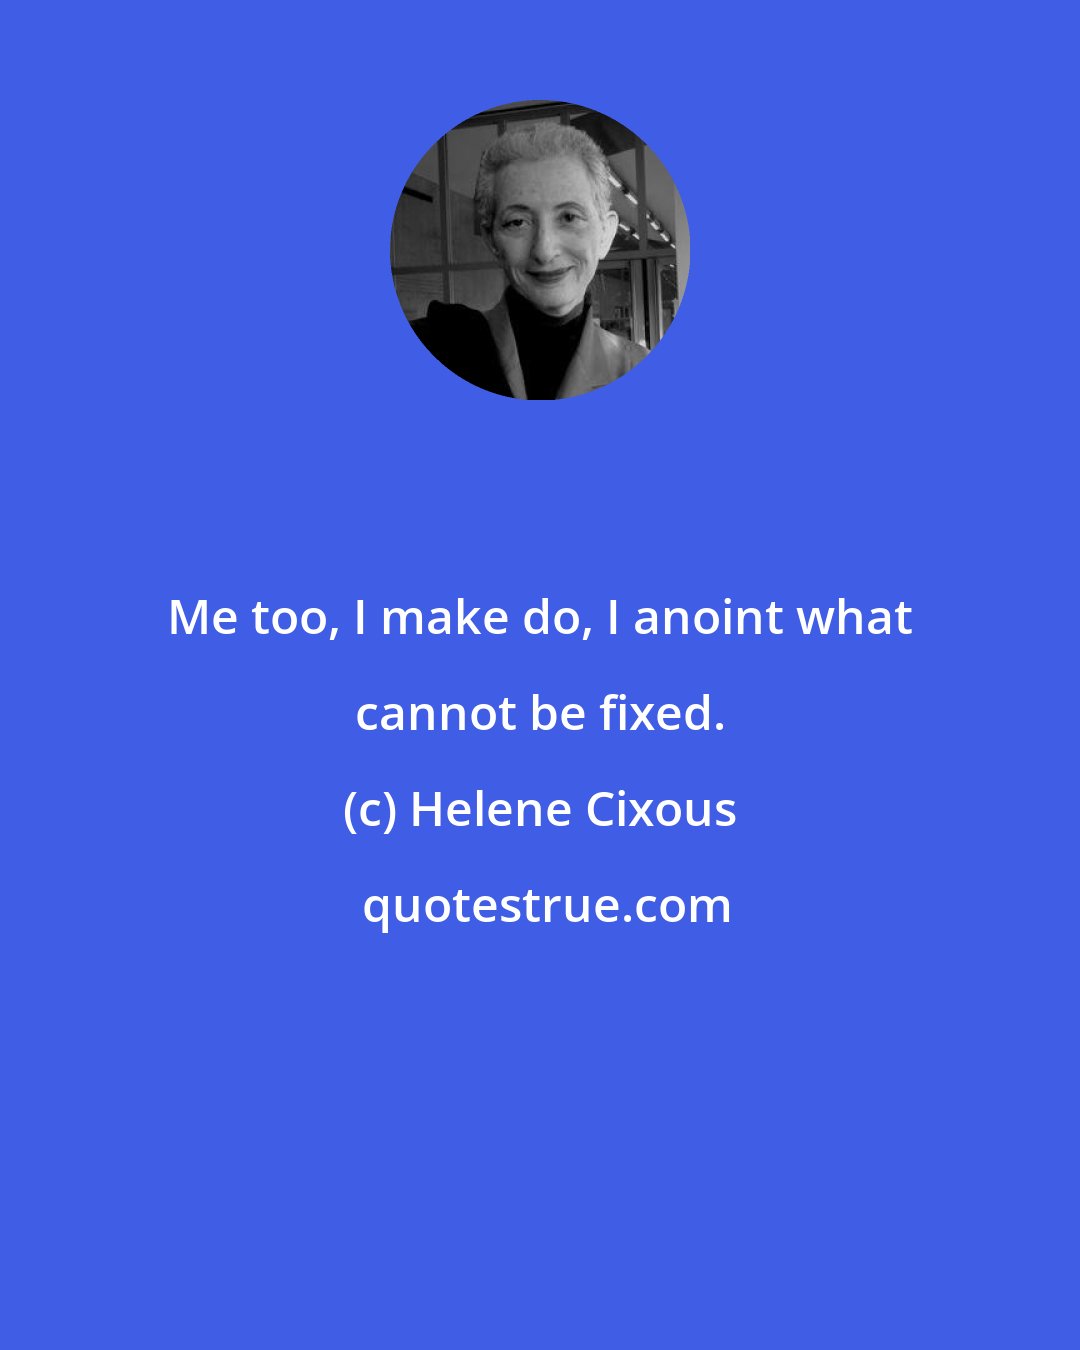 Helene Cixous: Me too, I make do, I anoint what cannot be fixed.